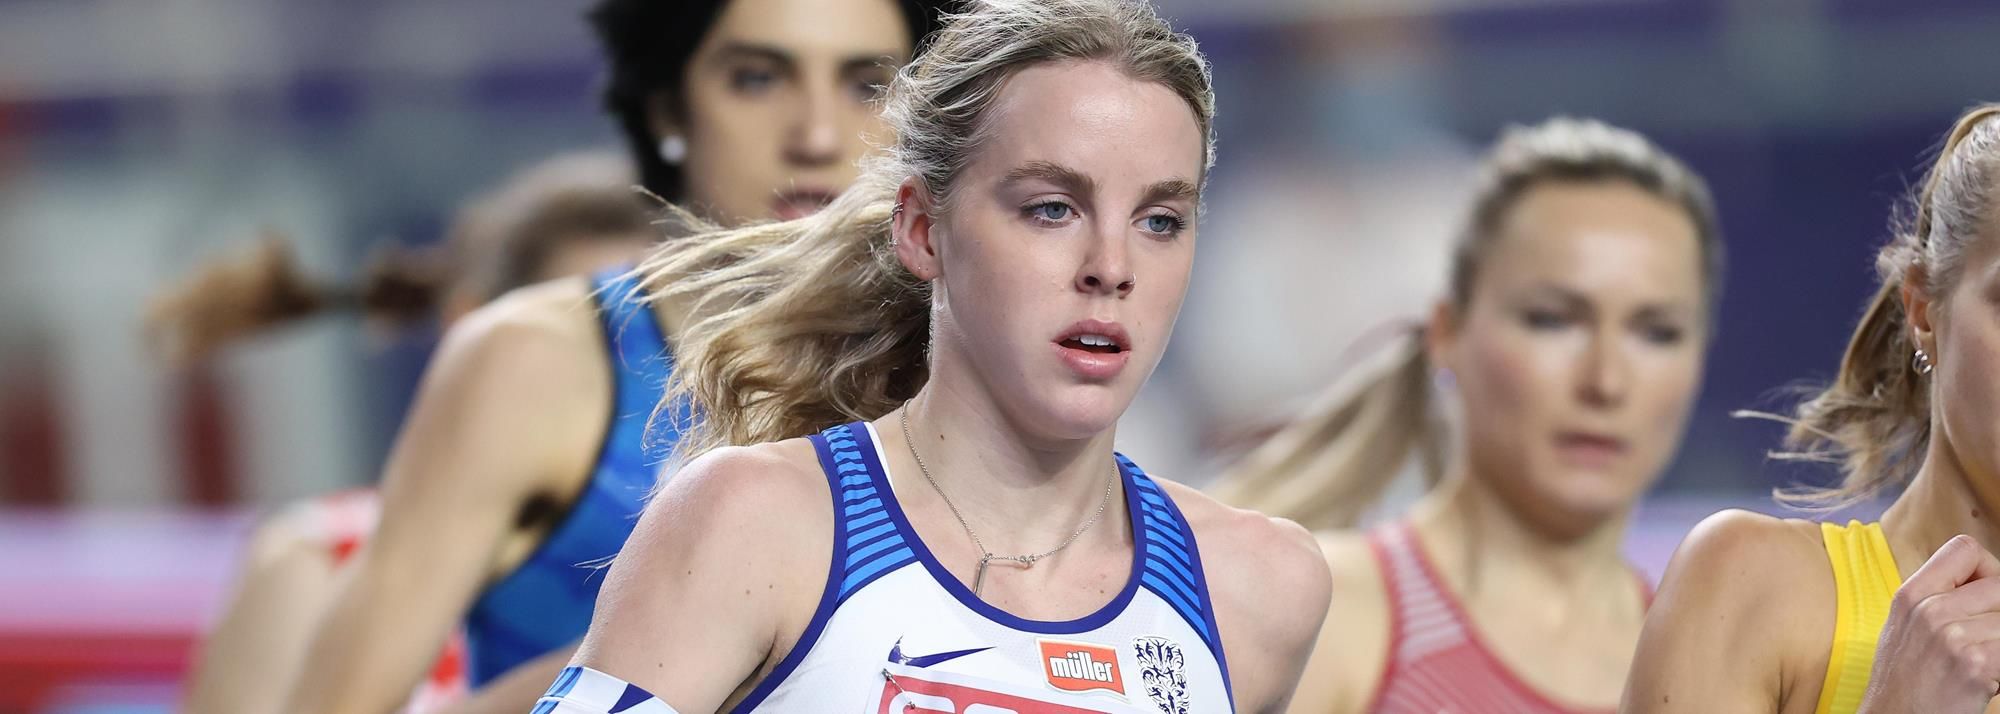 Keely HODGKINSON | Profile | World Athletics